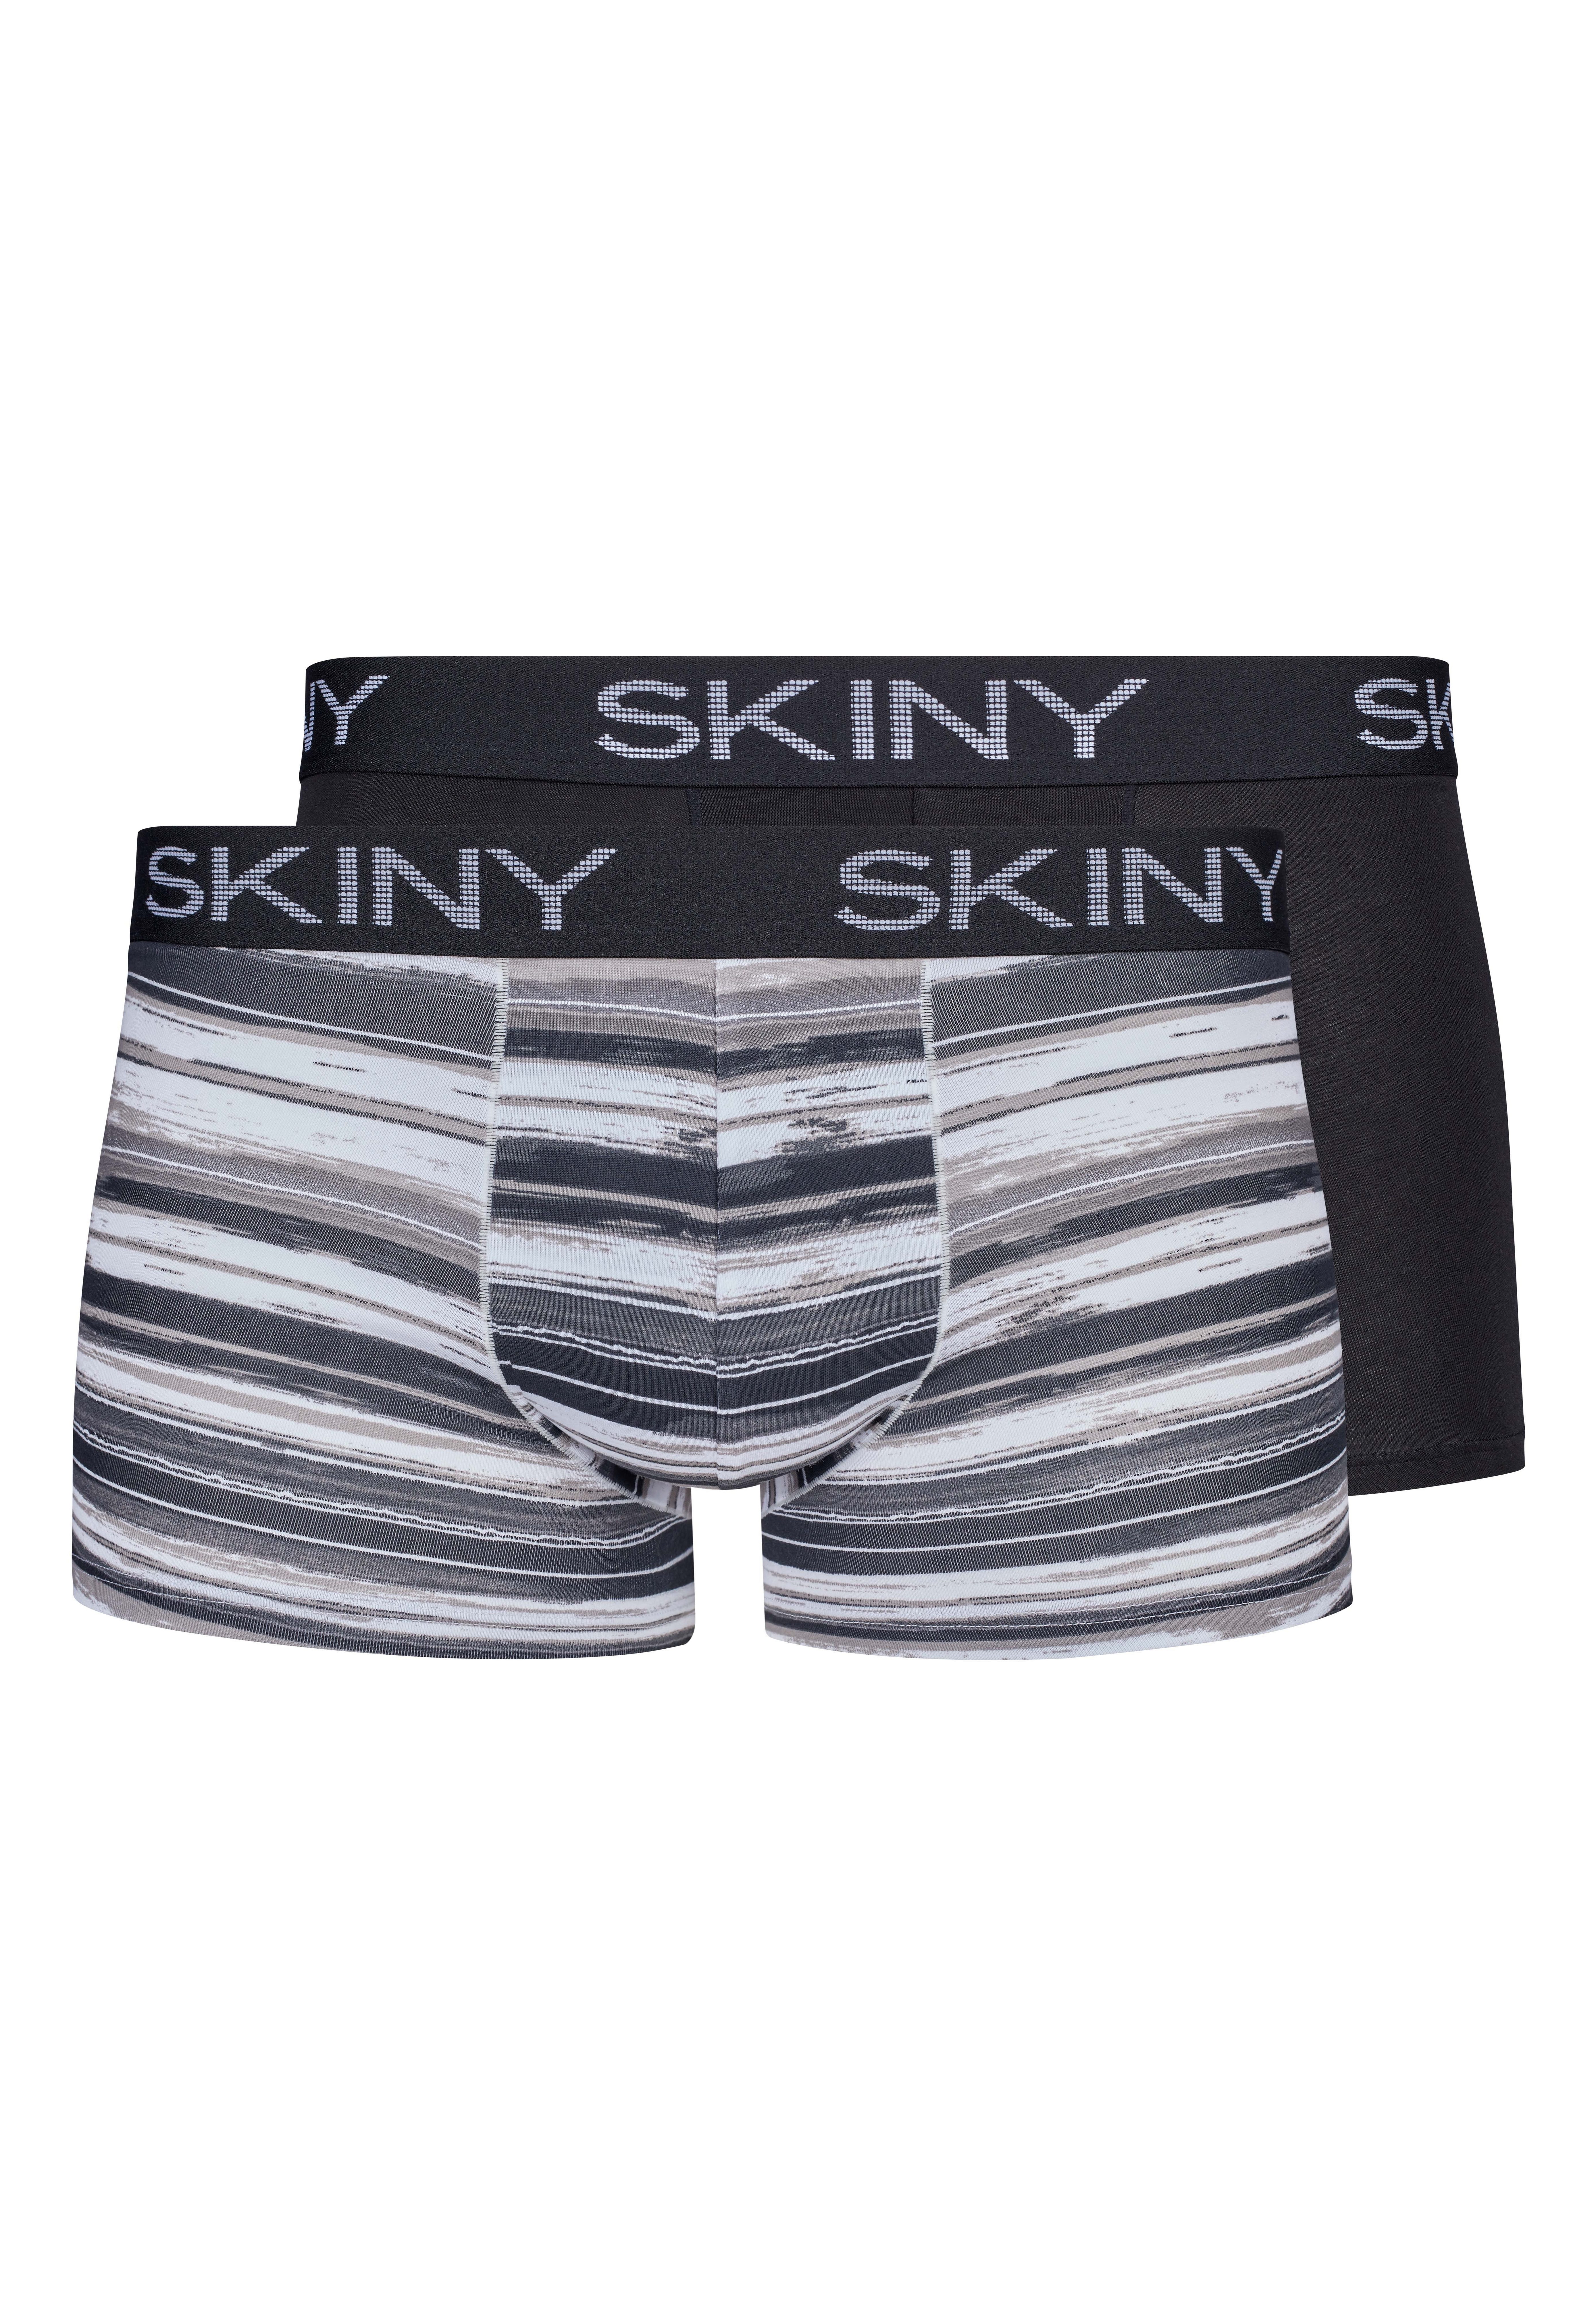 Skiny Retro Pants Doppelpack Boxershorts schwarz/weiß schwarz | (2-St) Doppelpack Herren